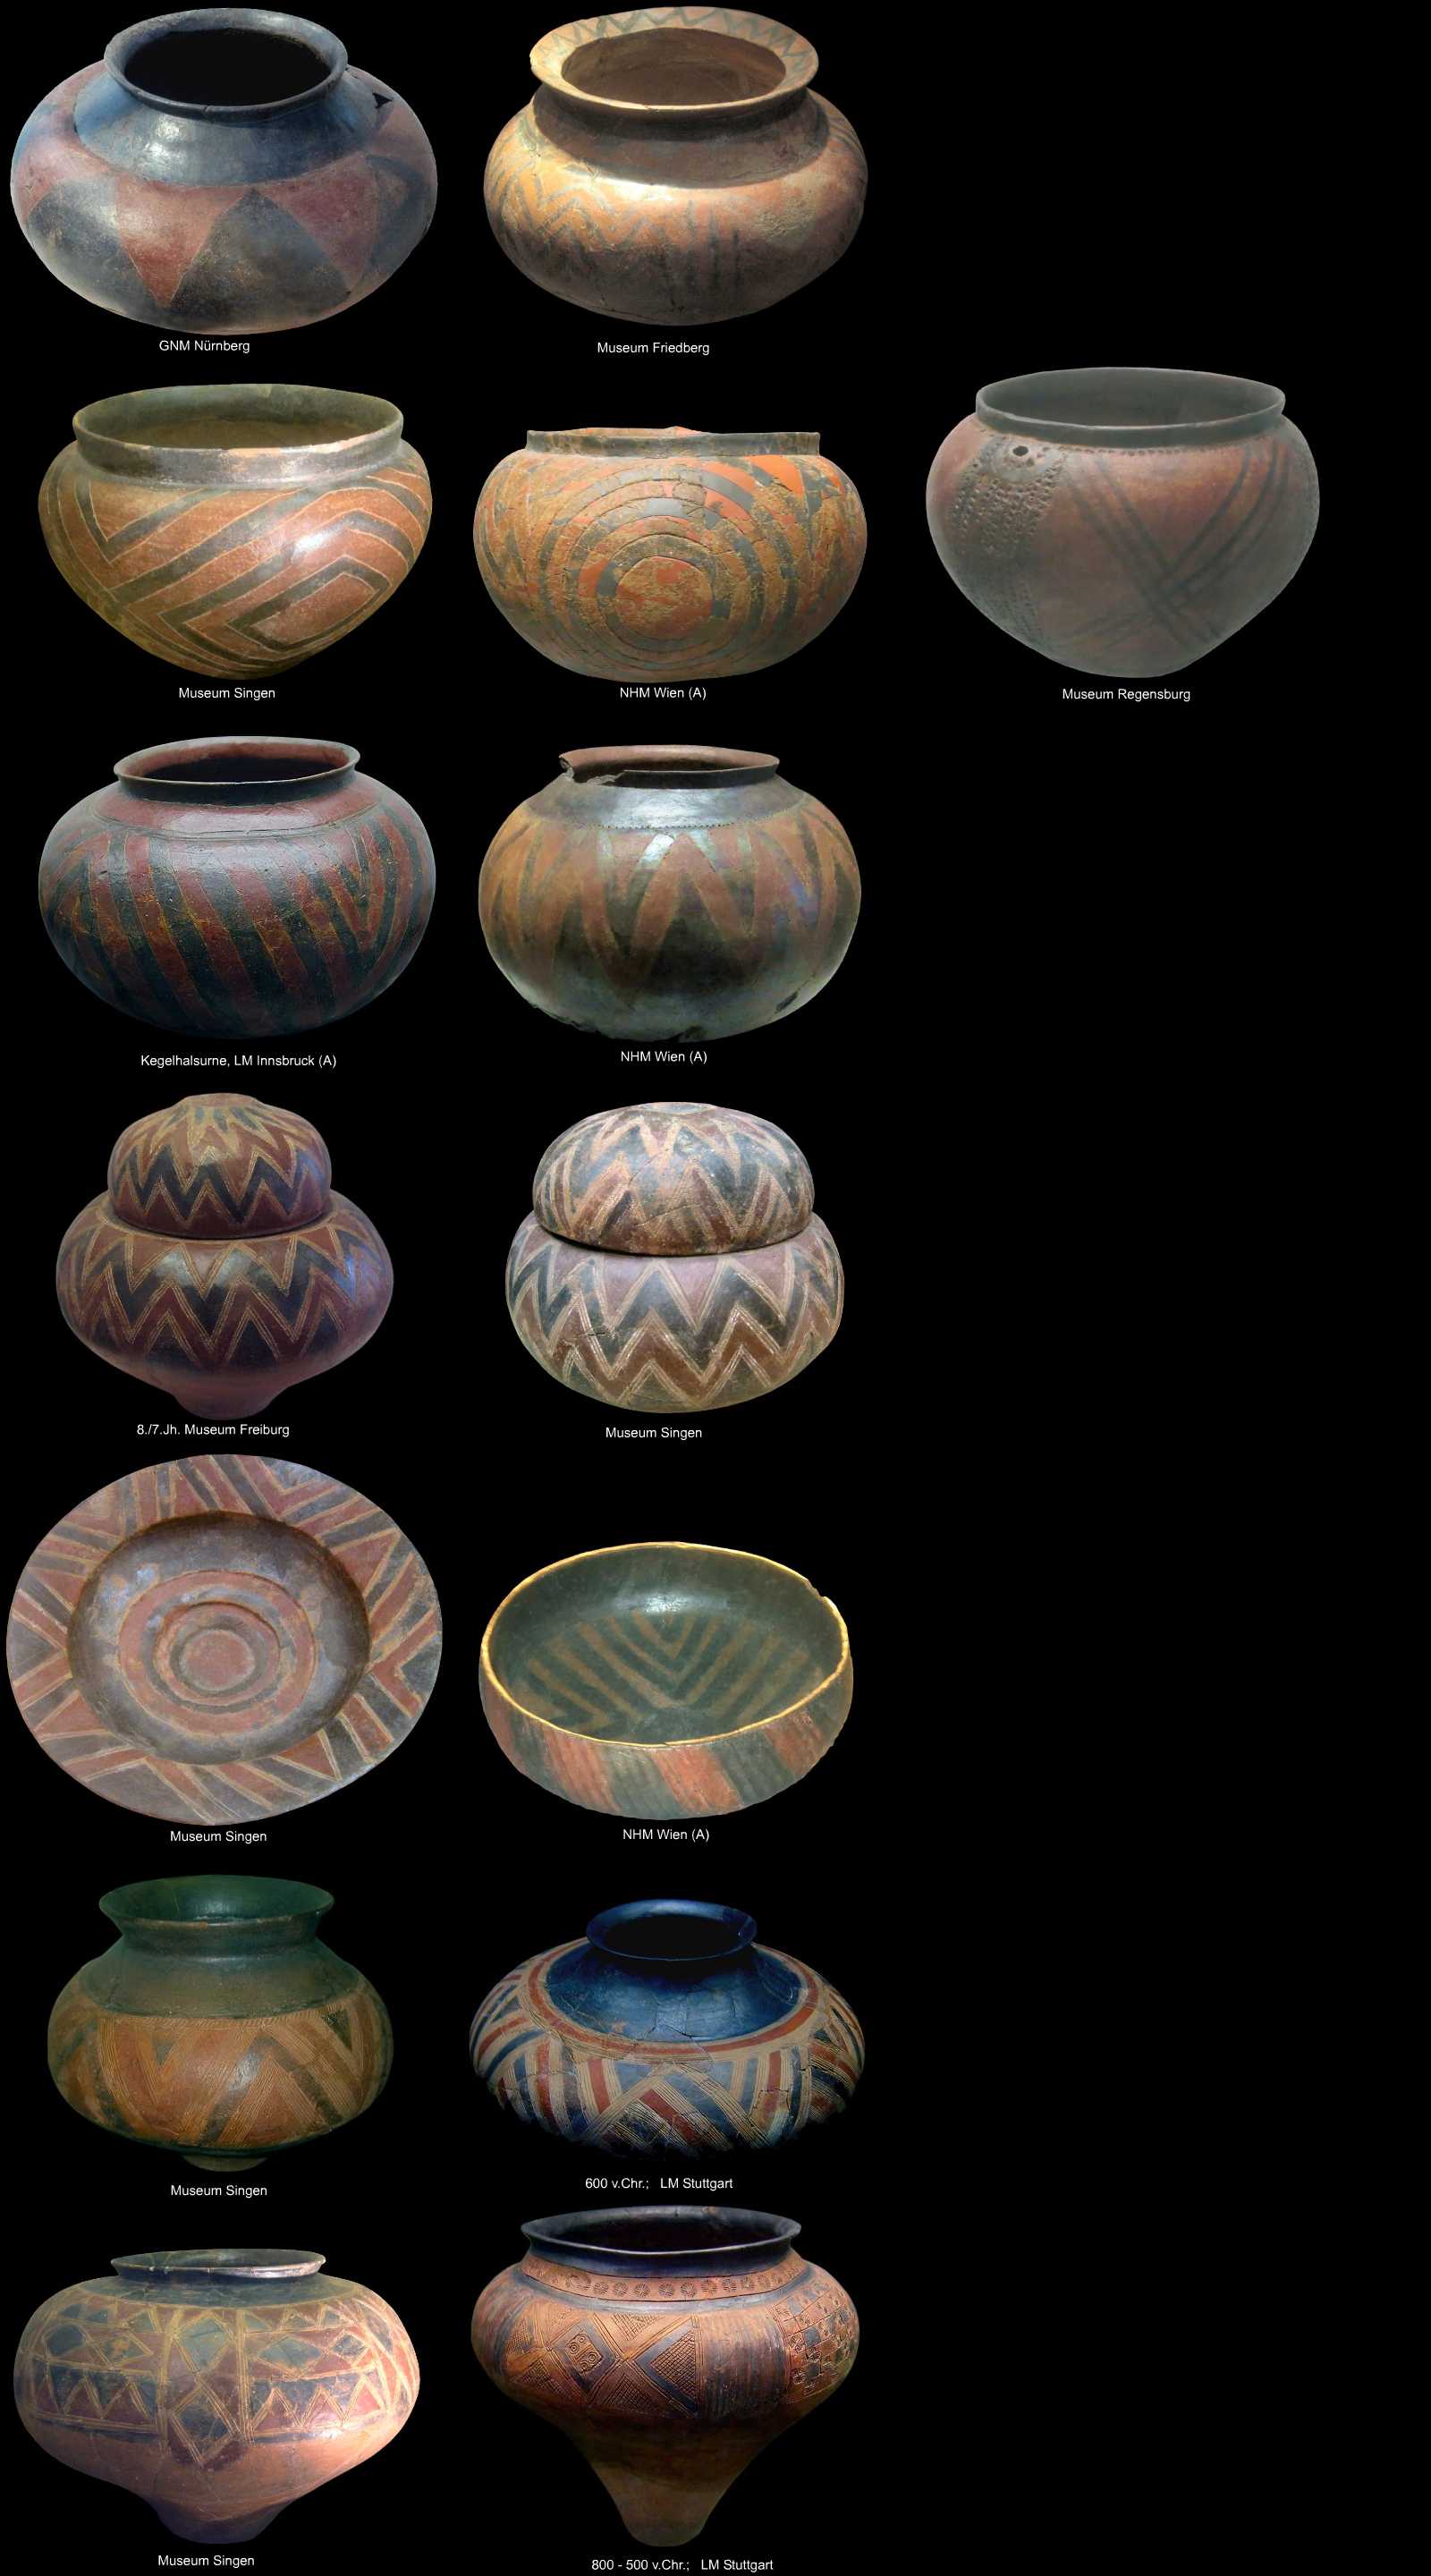 graphitdekorierte keltische Keramik2